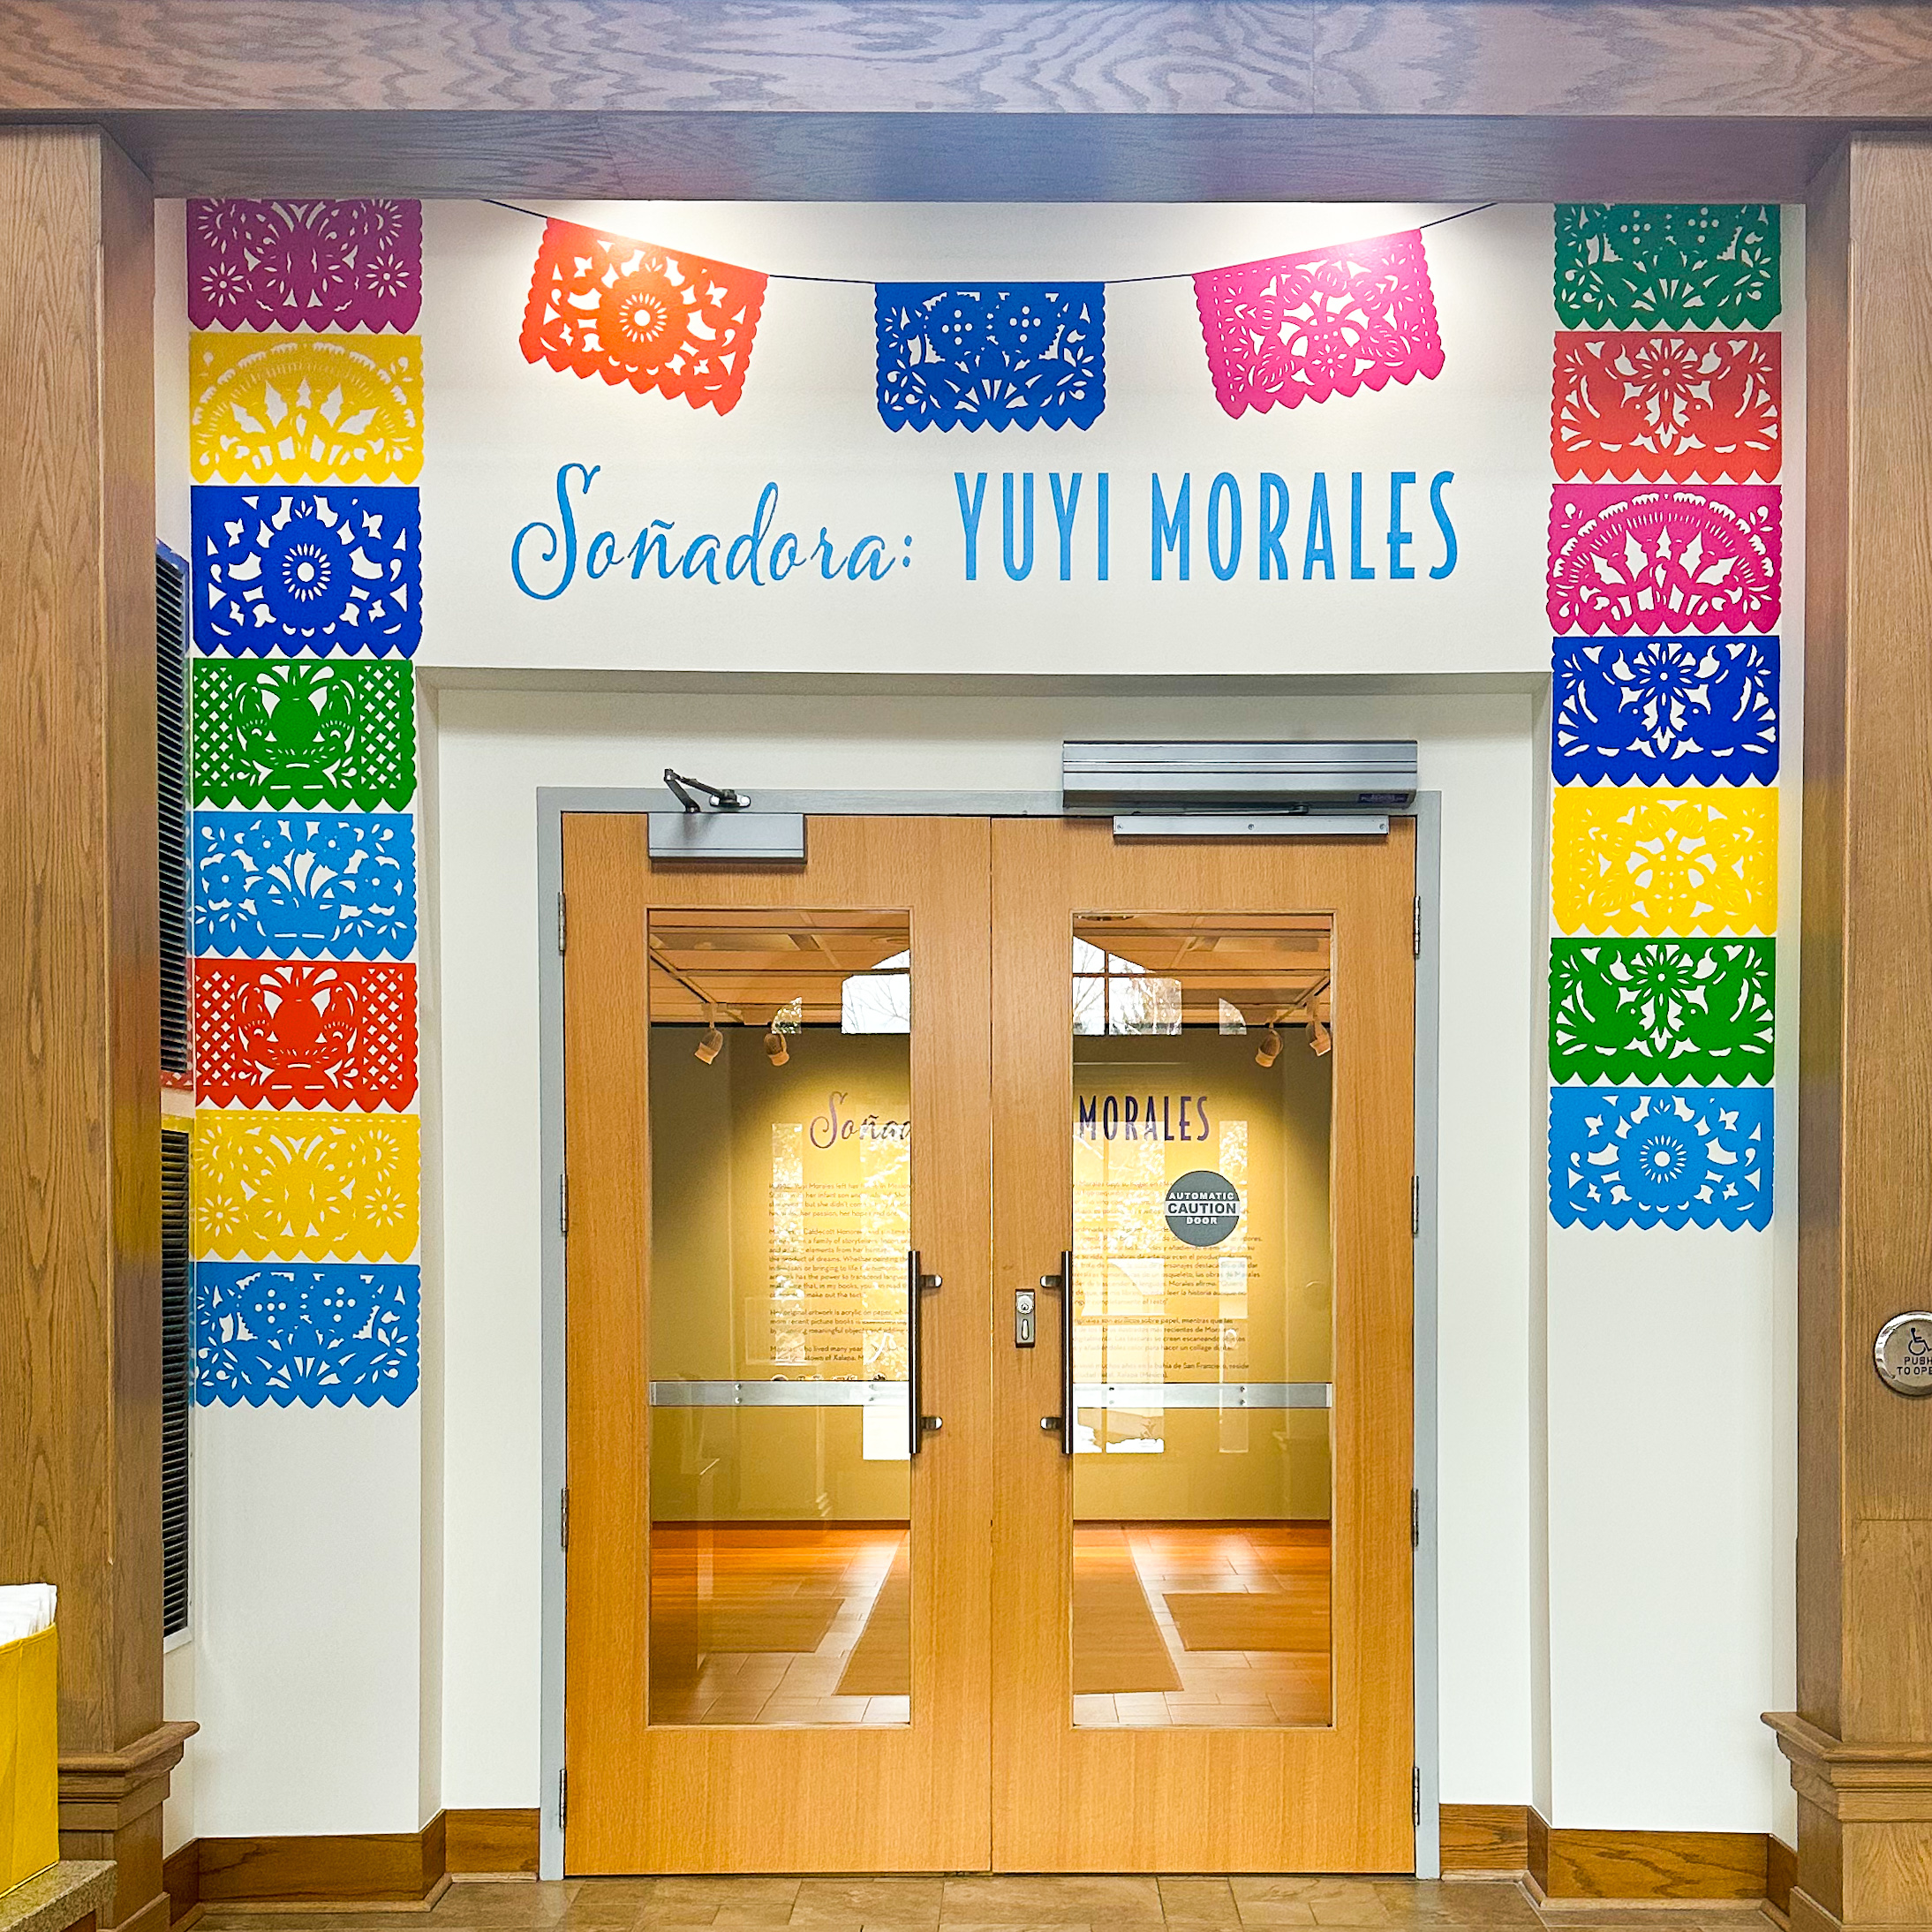 Installation image of "Soñadora: Yuyi Morales" entrance